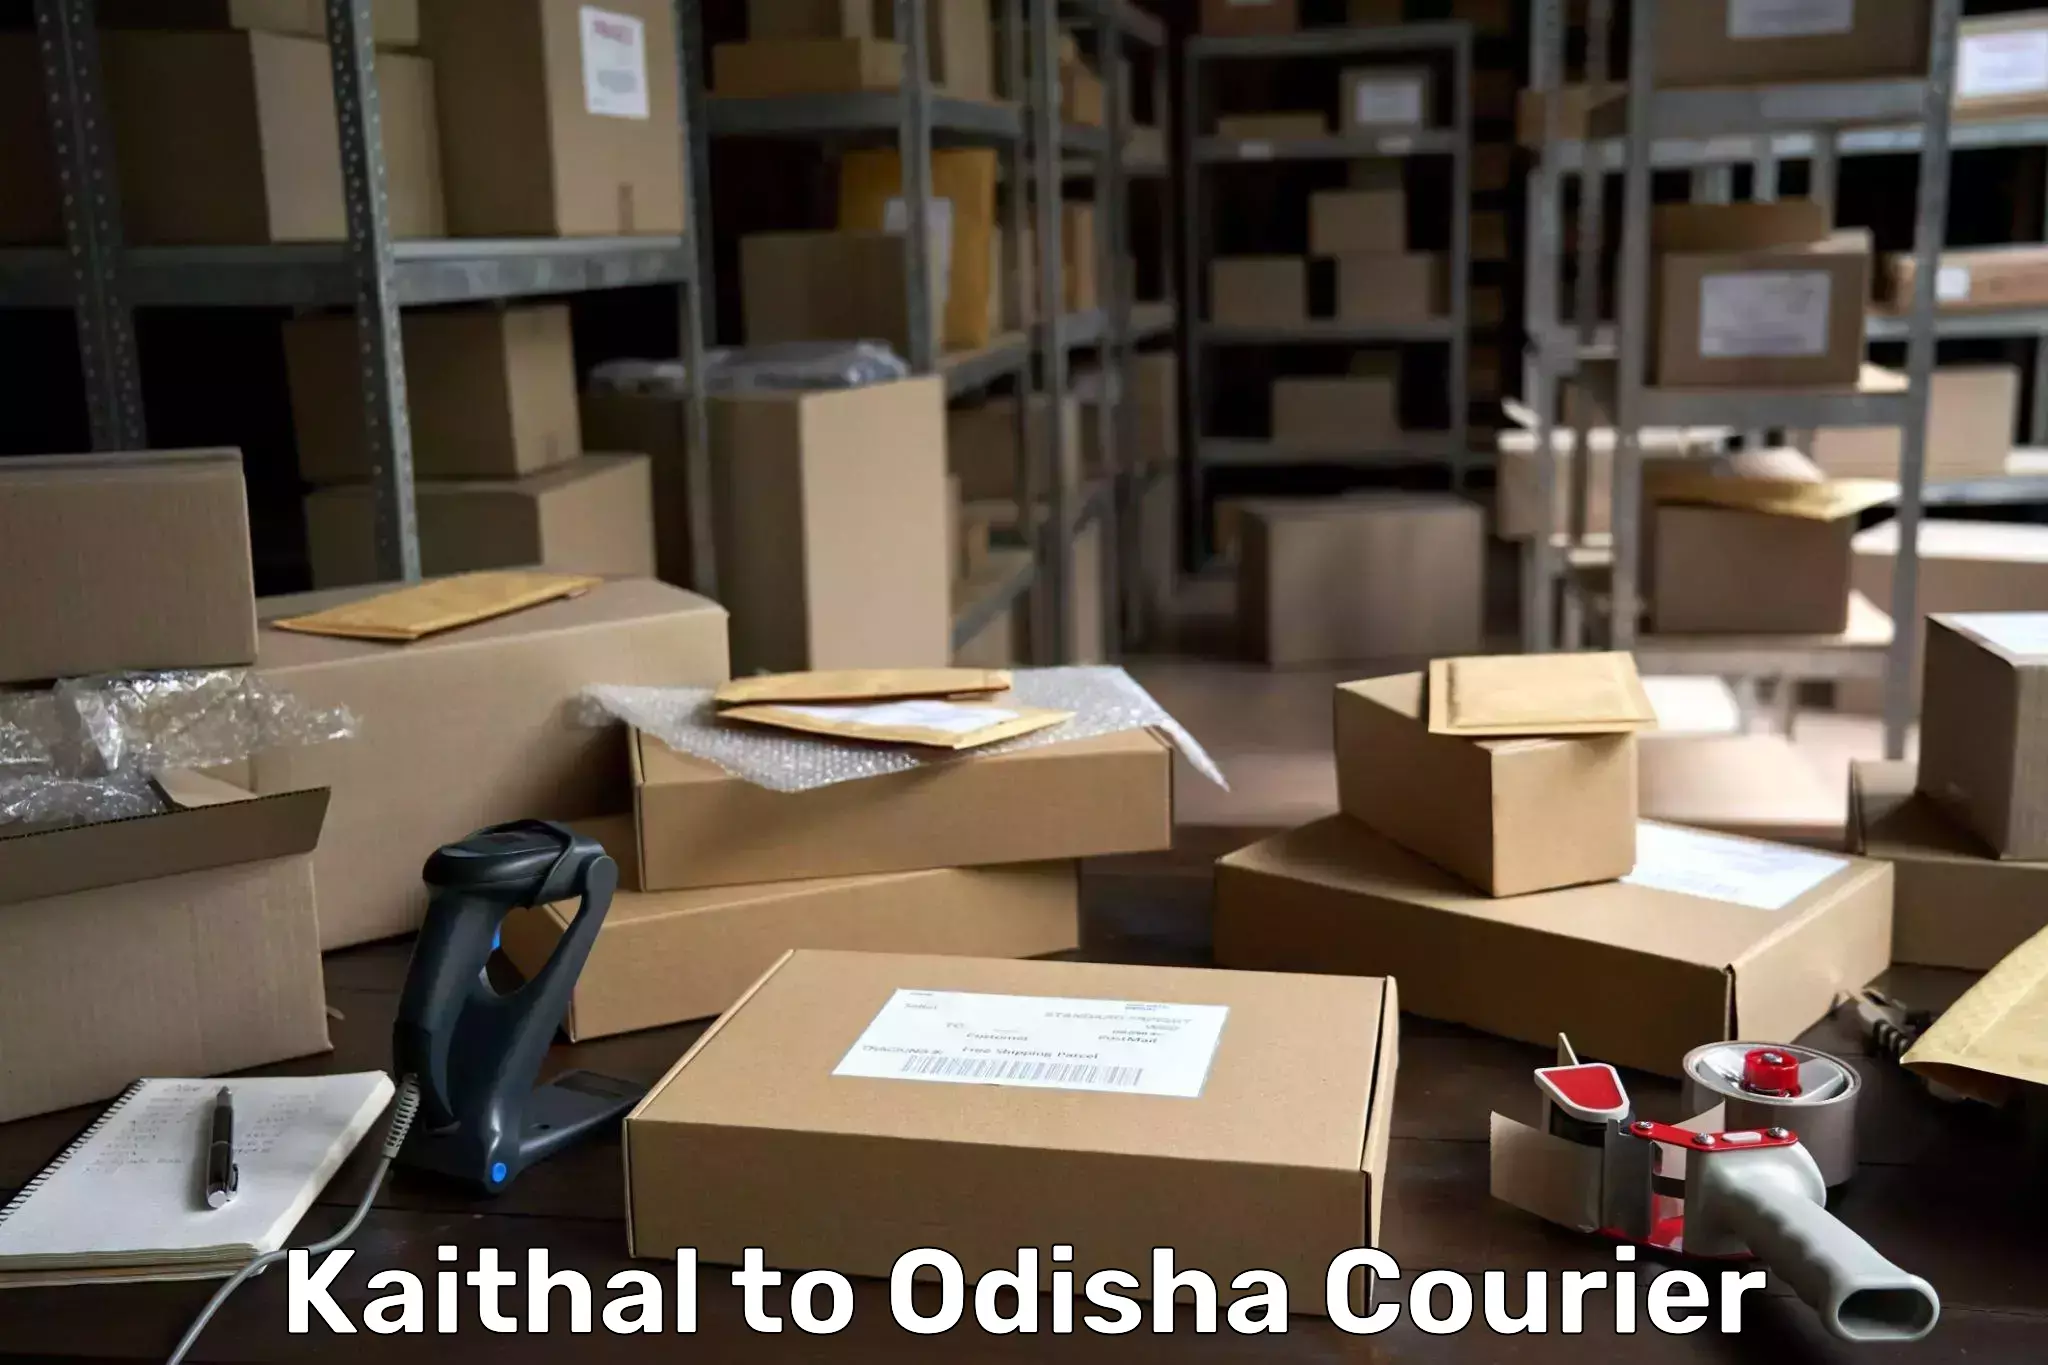 Subscription-based courier Kaithal to Odisha